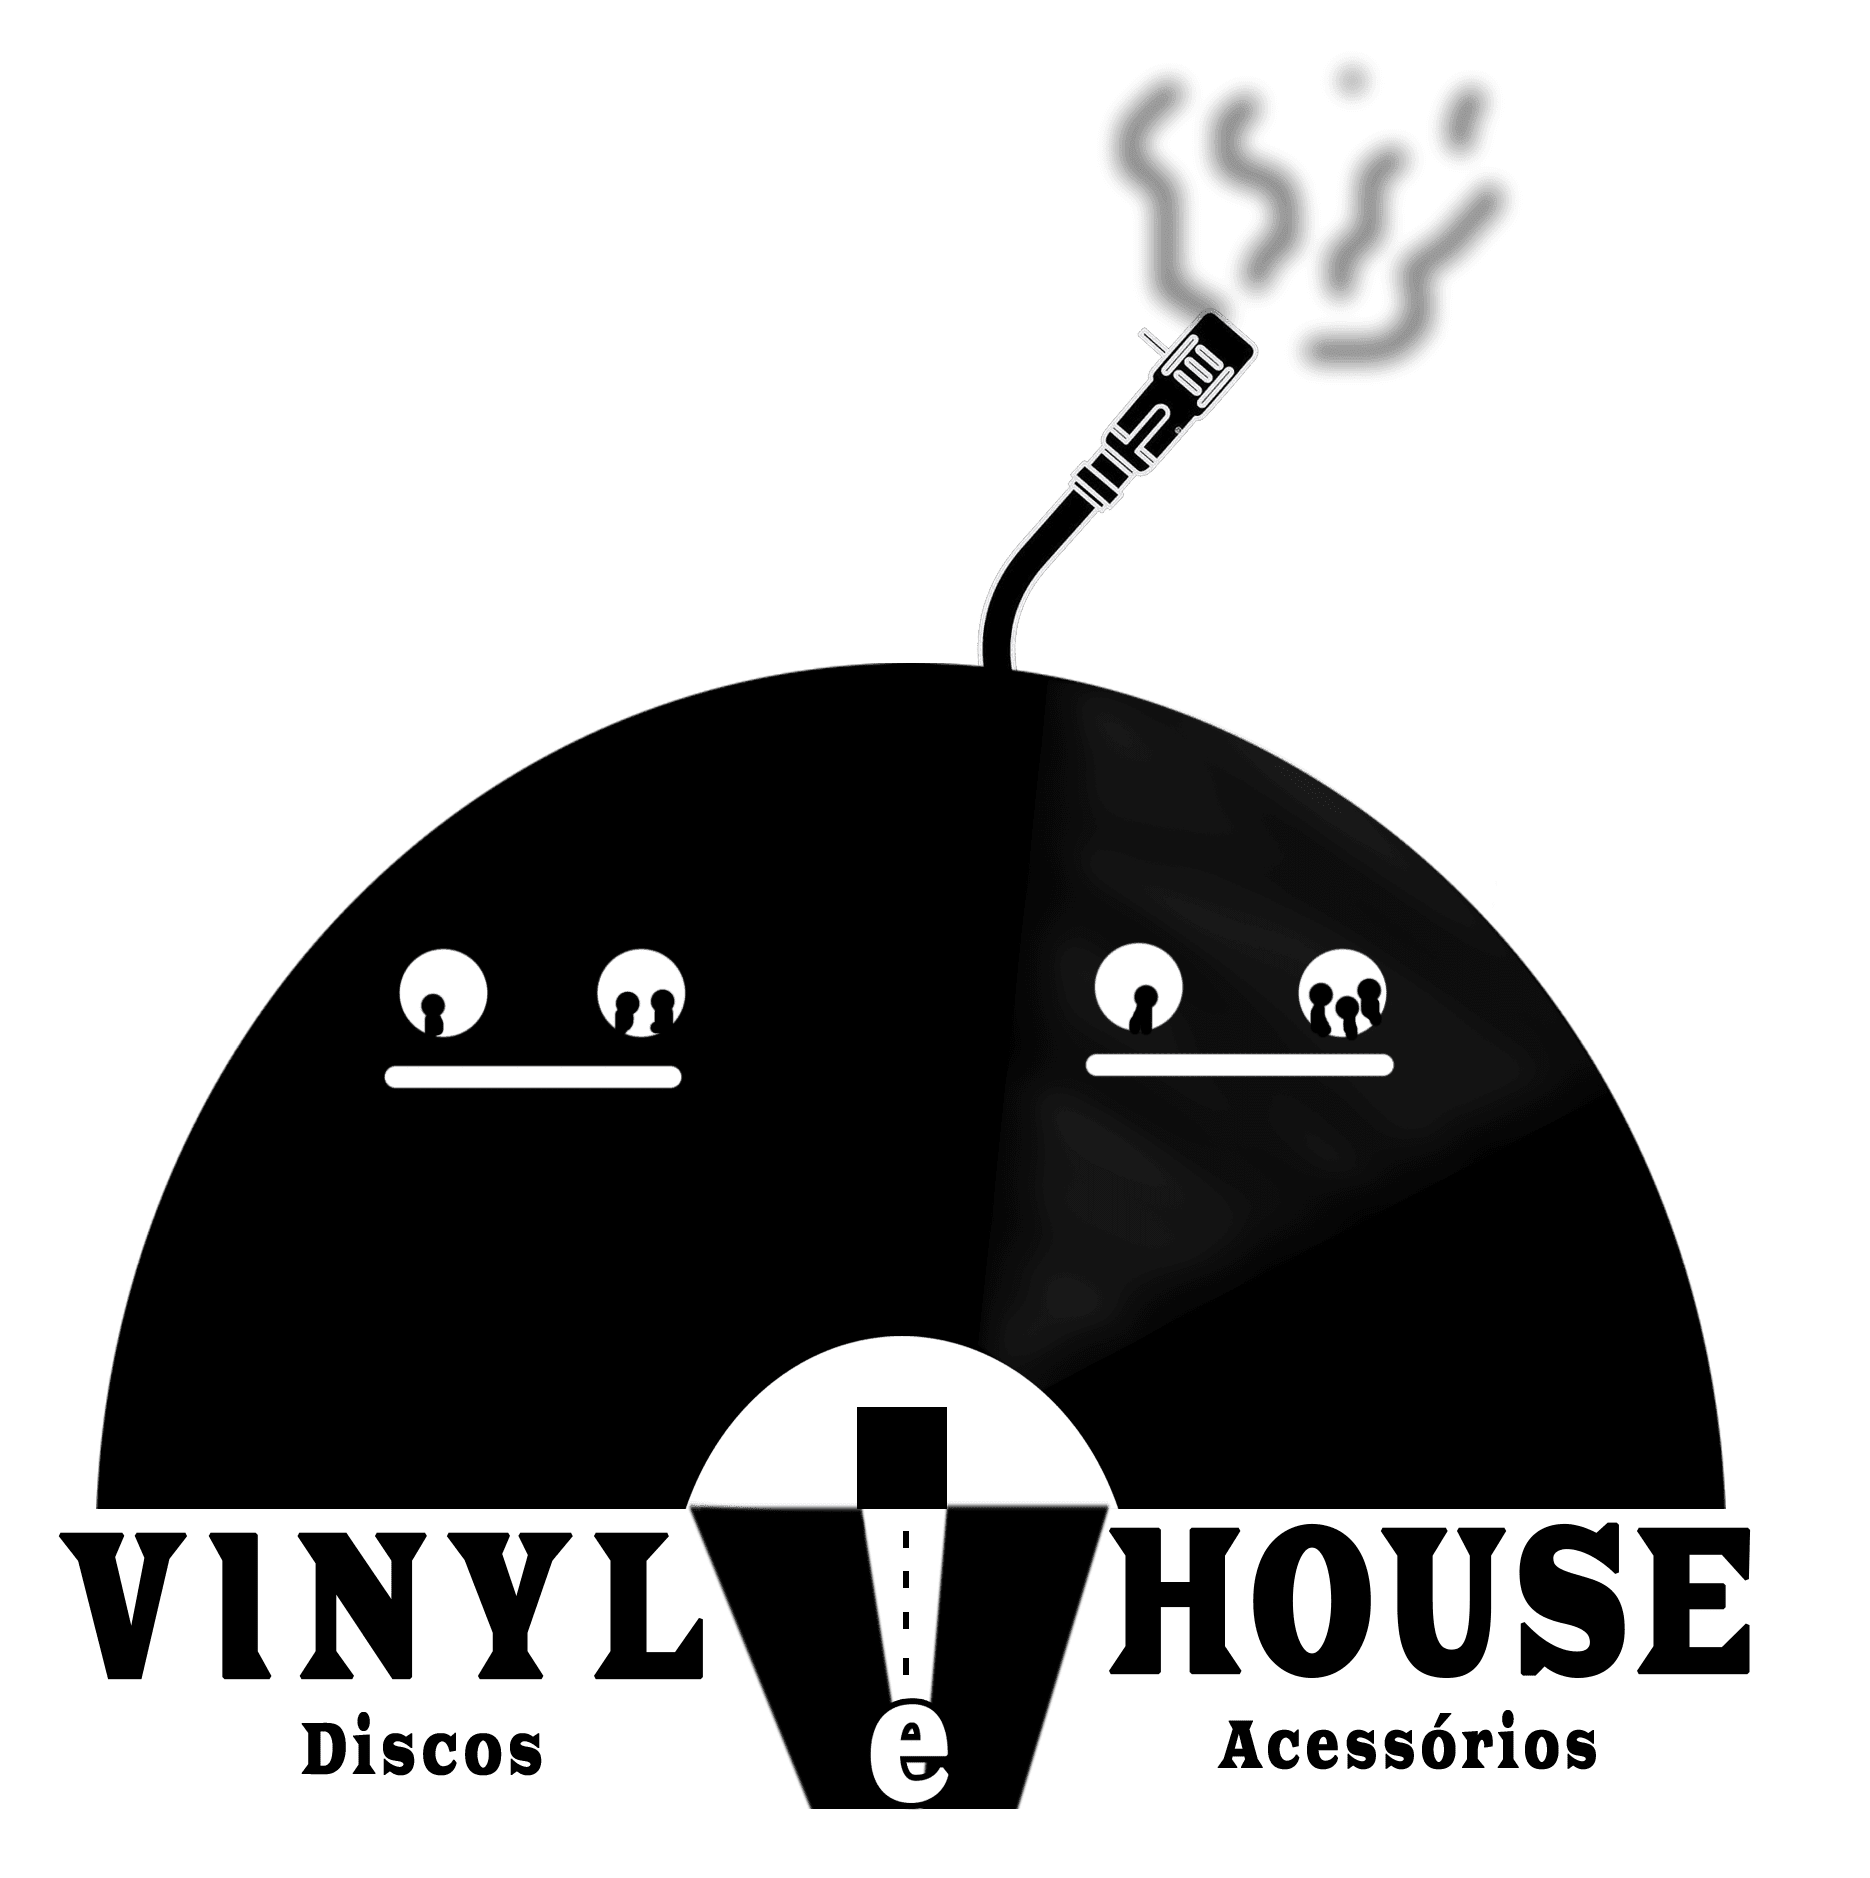 Vinyl House